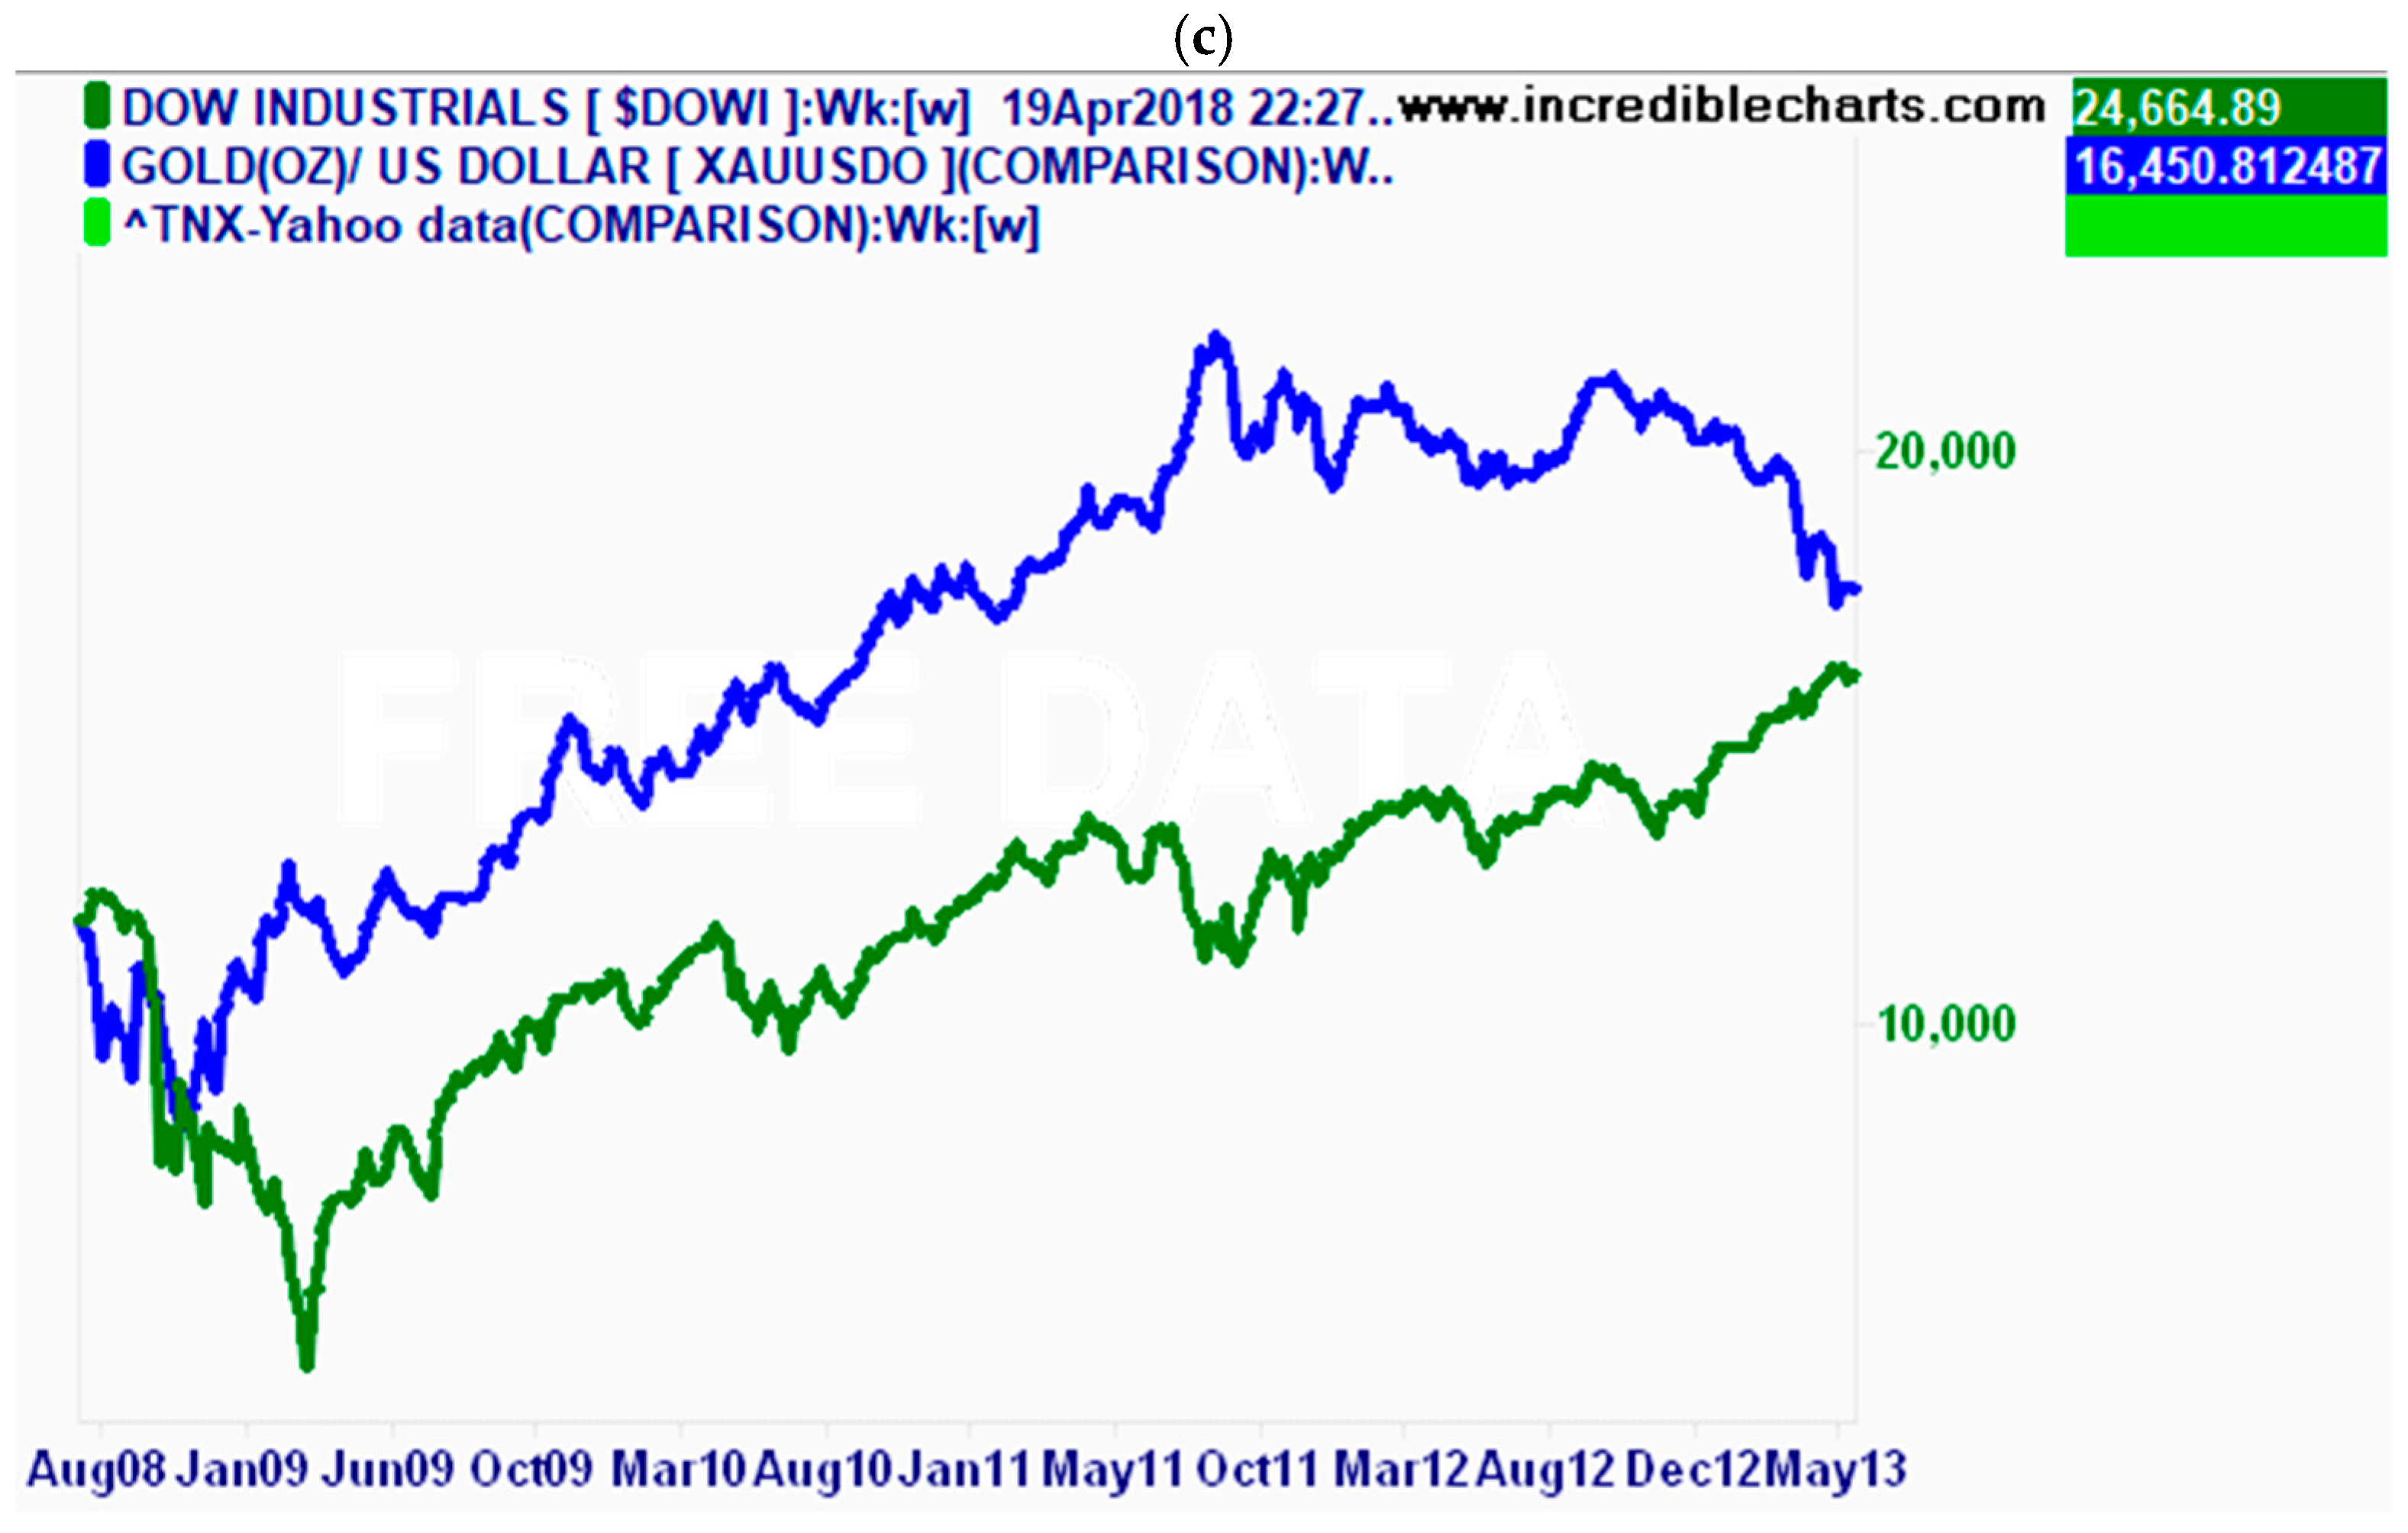 CEE MARKETS-FX start week lower together after recent divergence